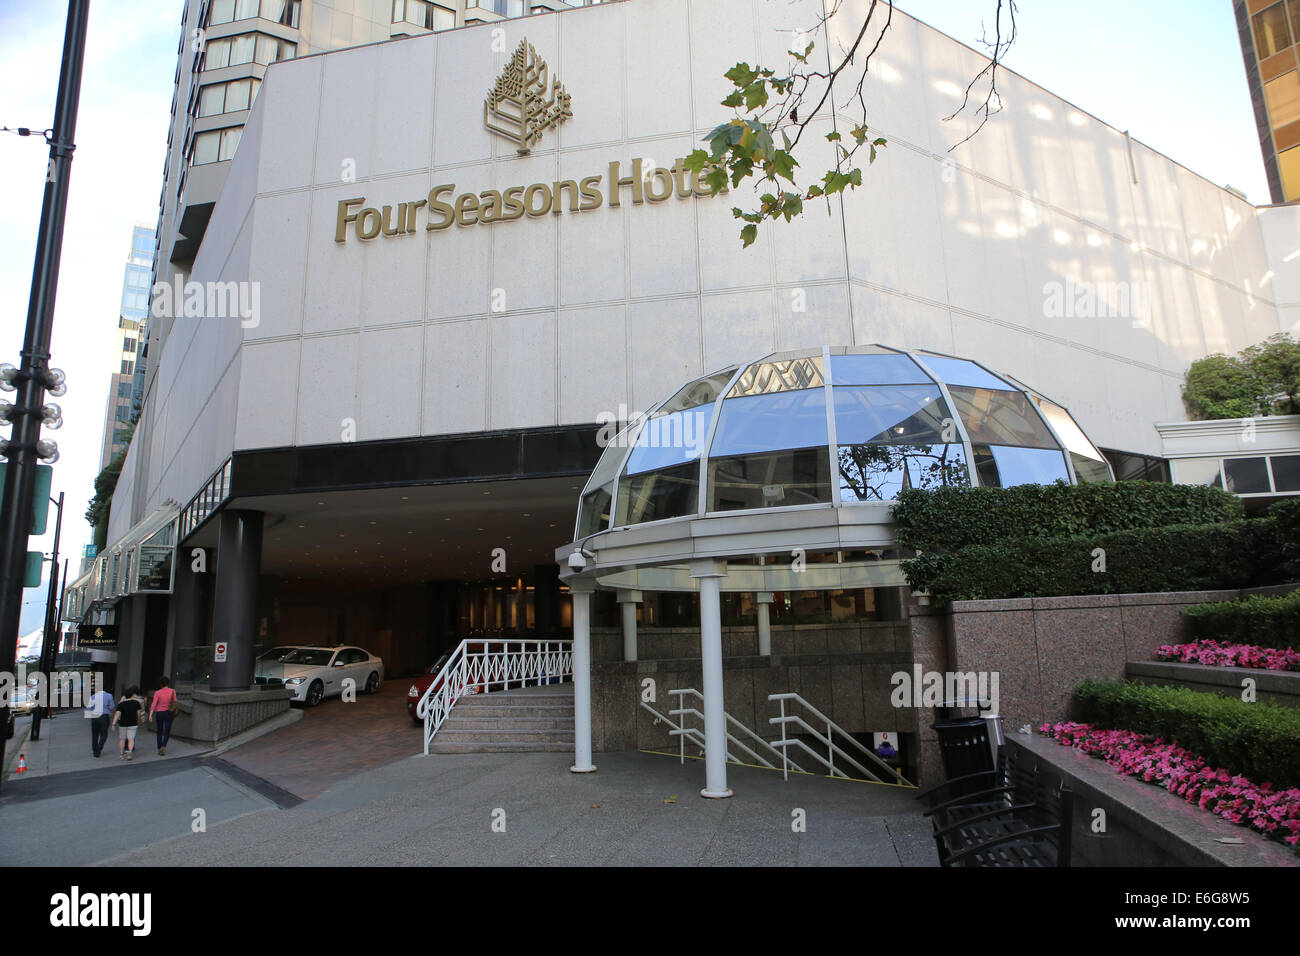 Four seasons hotel Vancouver Stock Photo